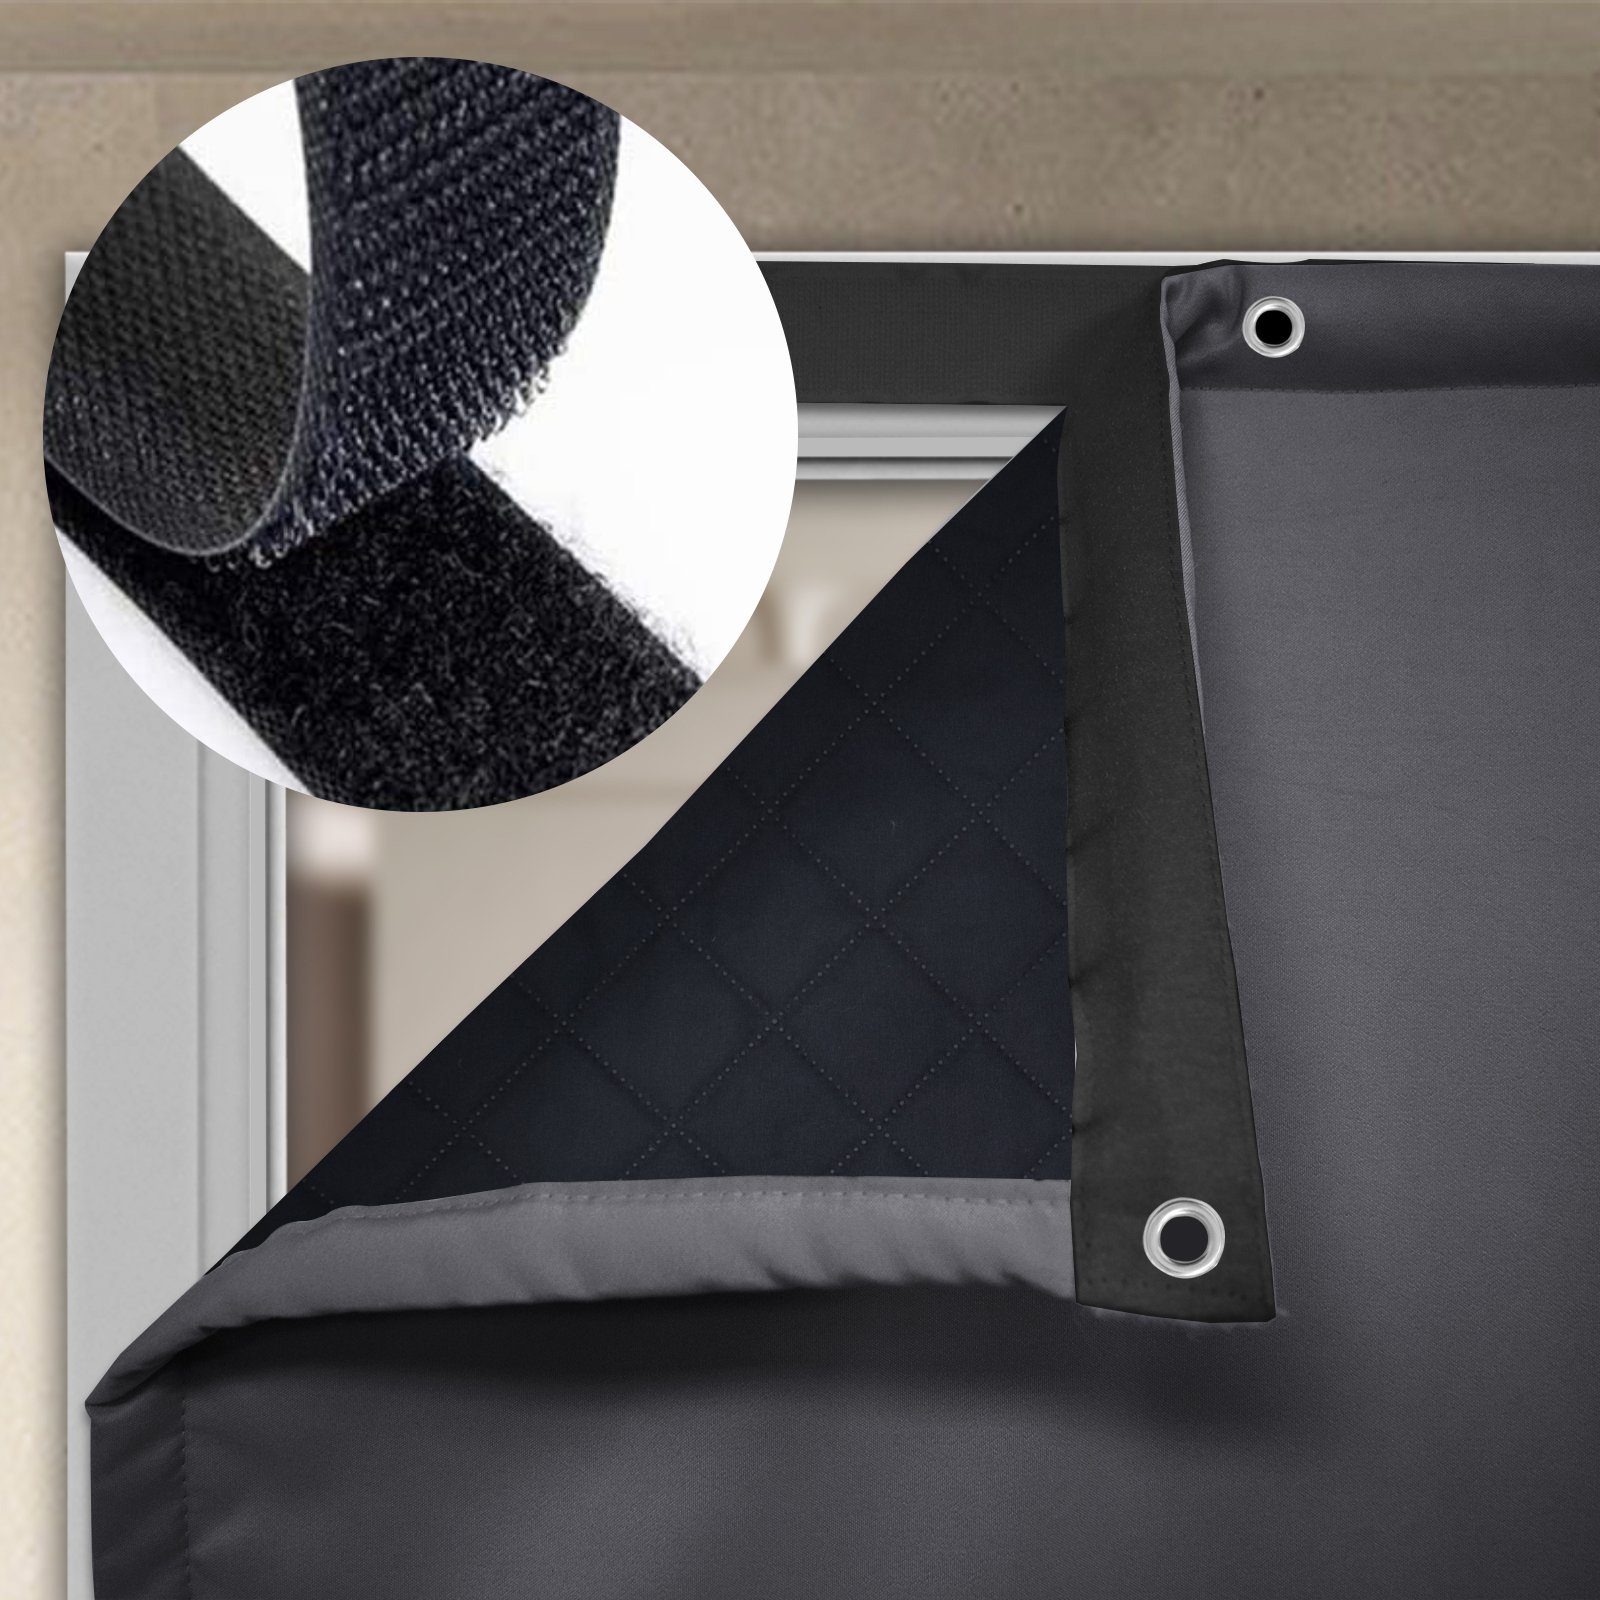 Qelus Raumteiler Türvorhang Selbstklebend Windbeständig Wasserdicht Grau Vorhang